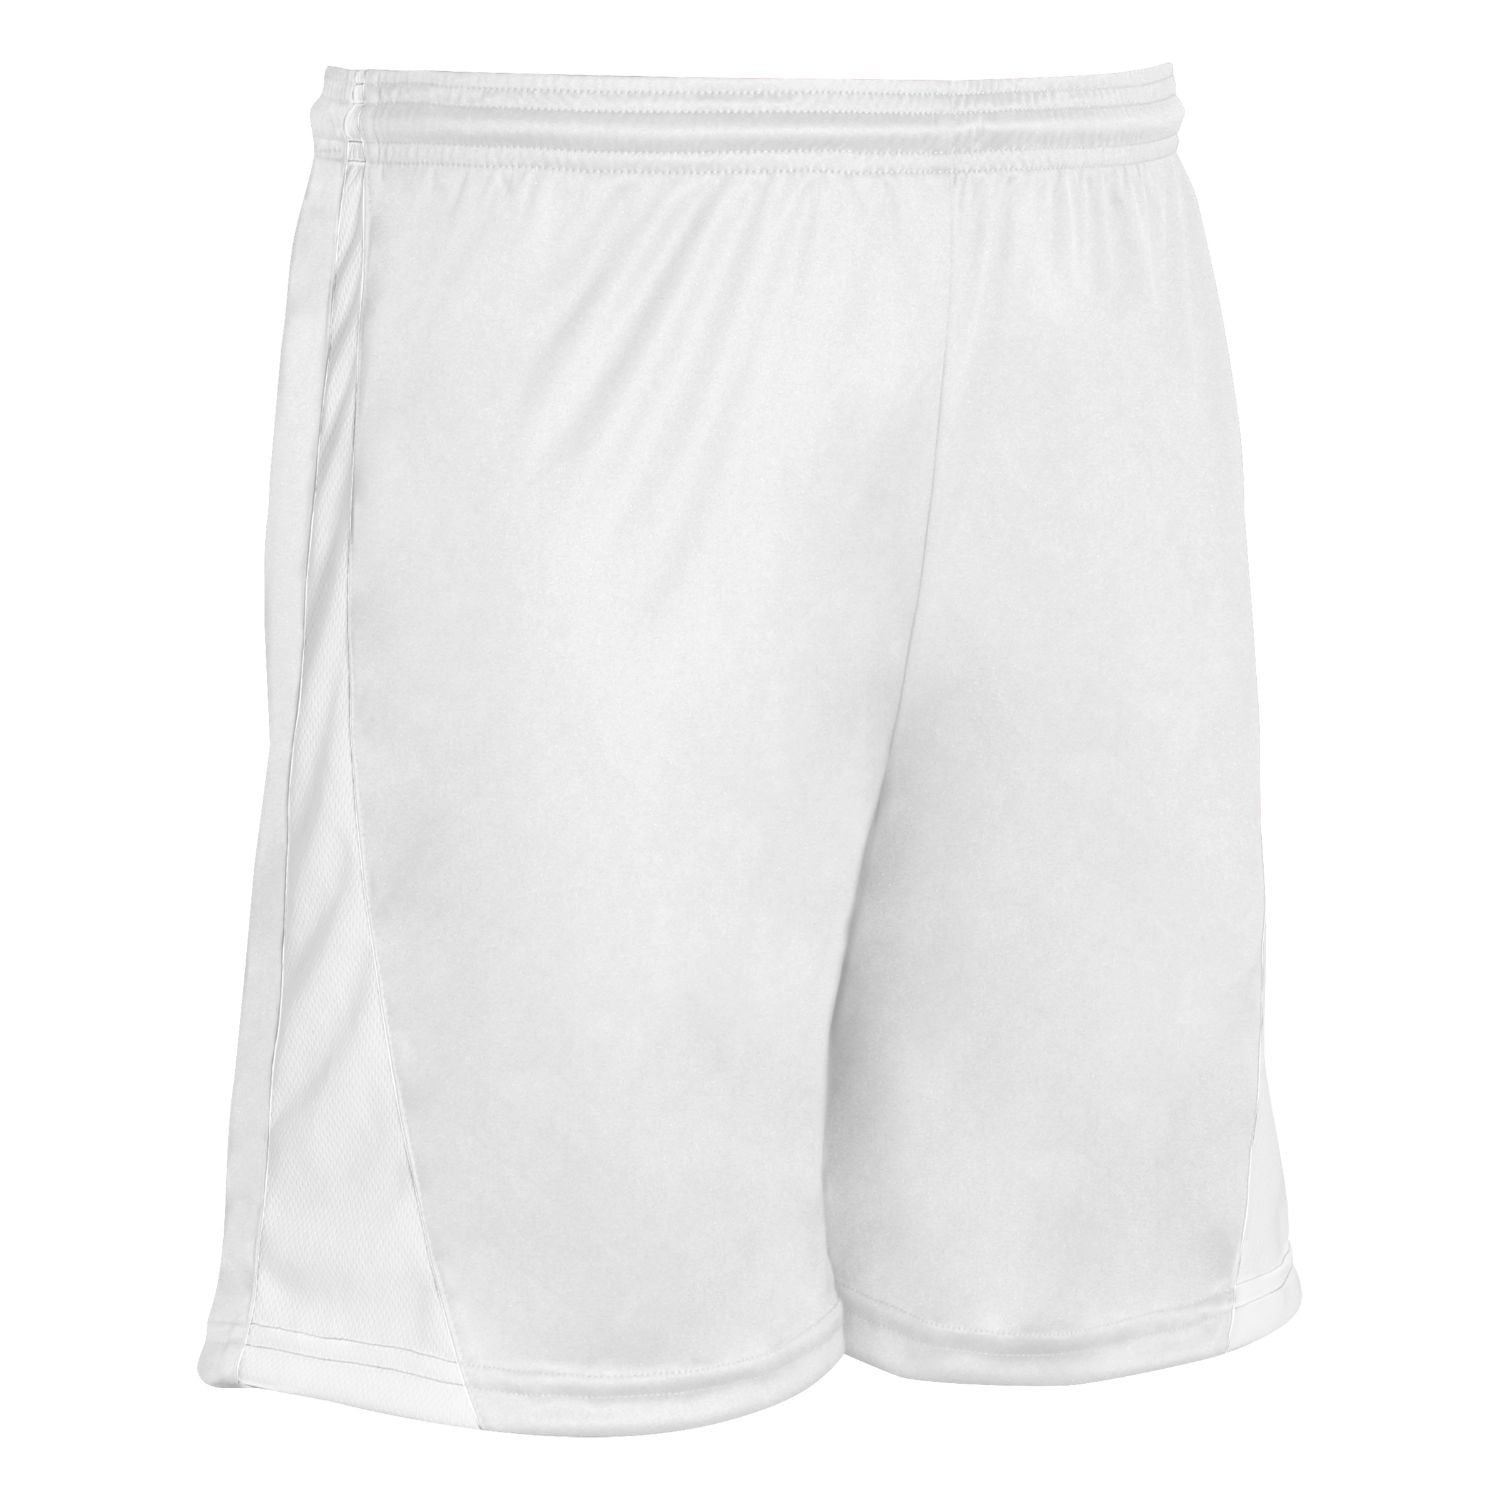 Champro Youth Sweeper Soccer Shorts White White Medium - Walmart.com ...